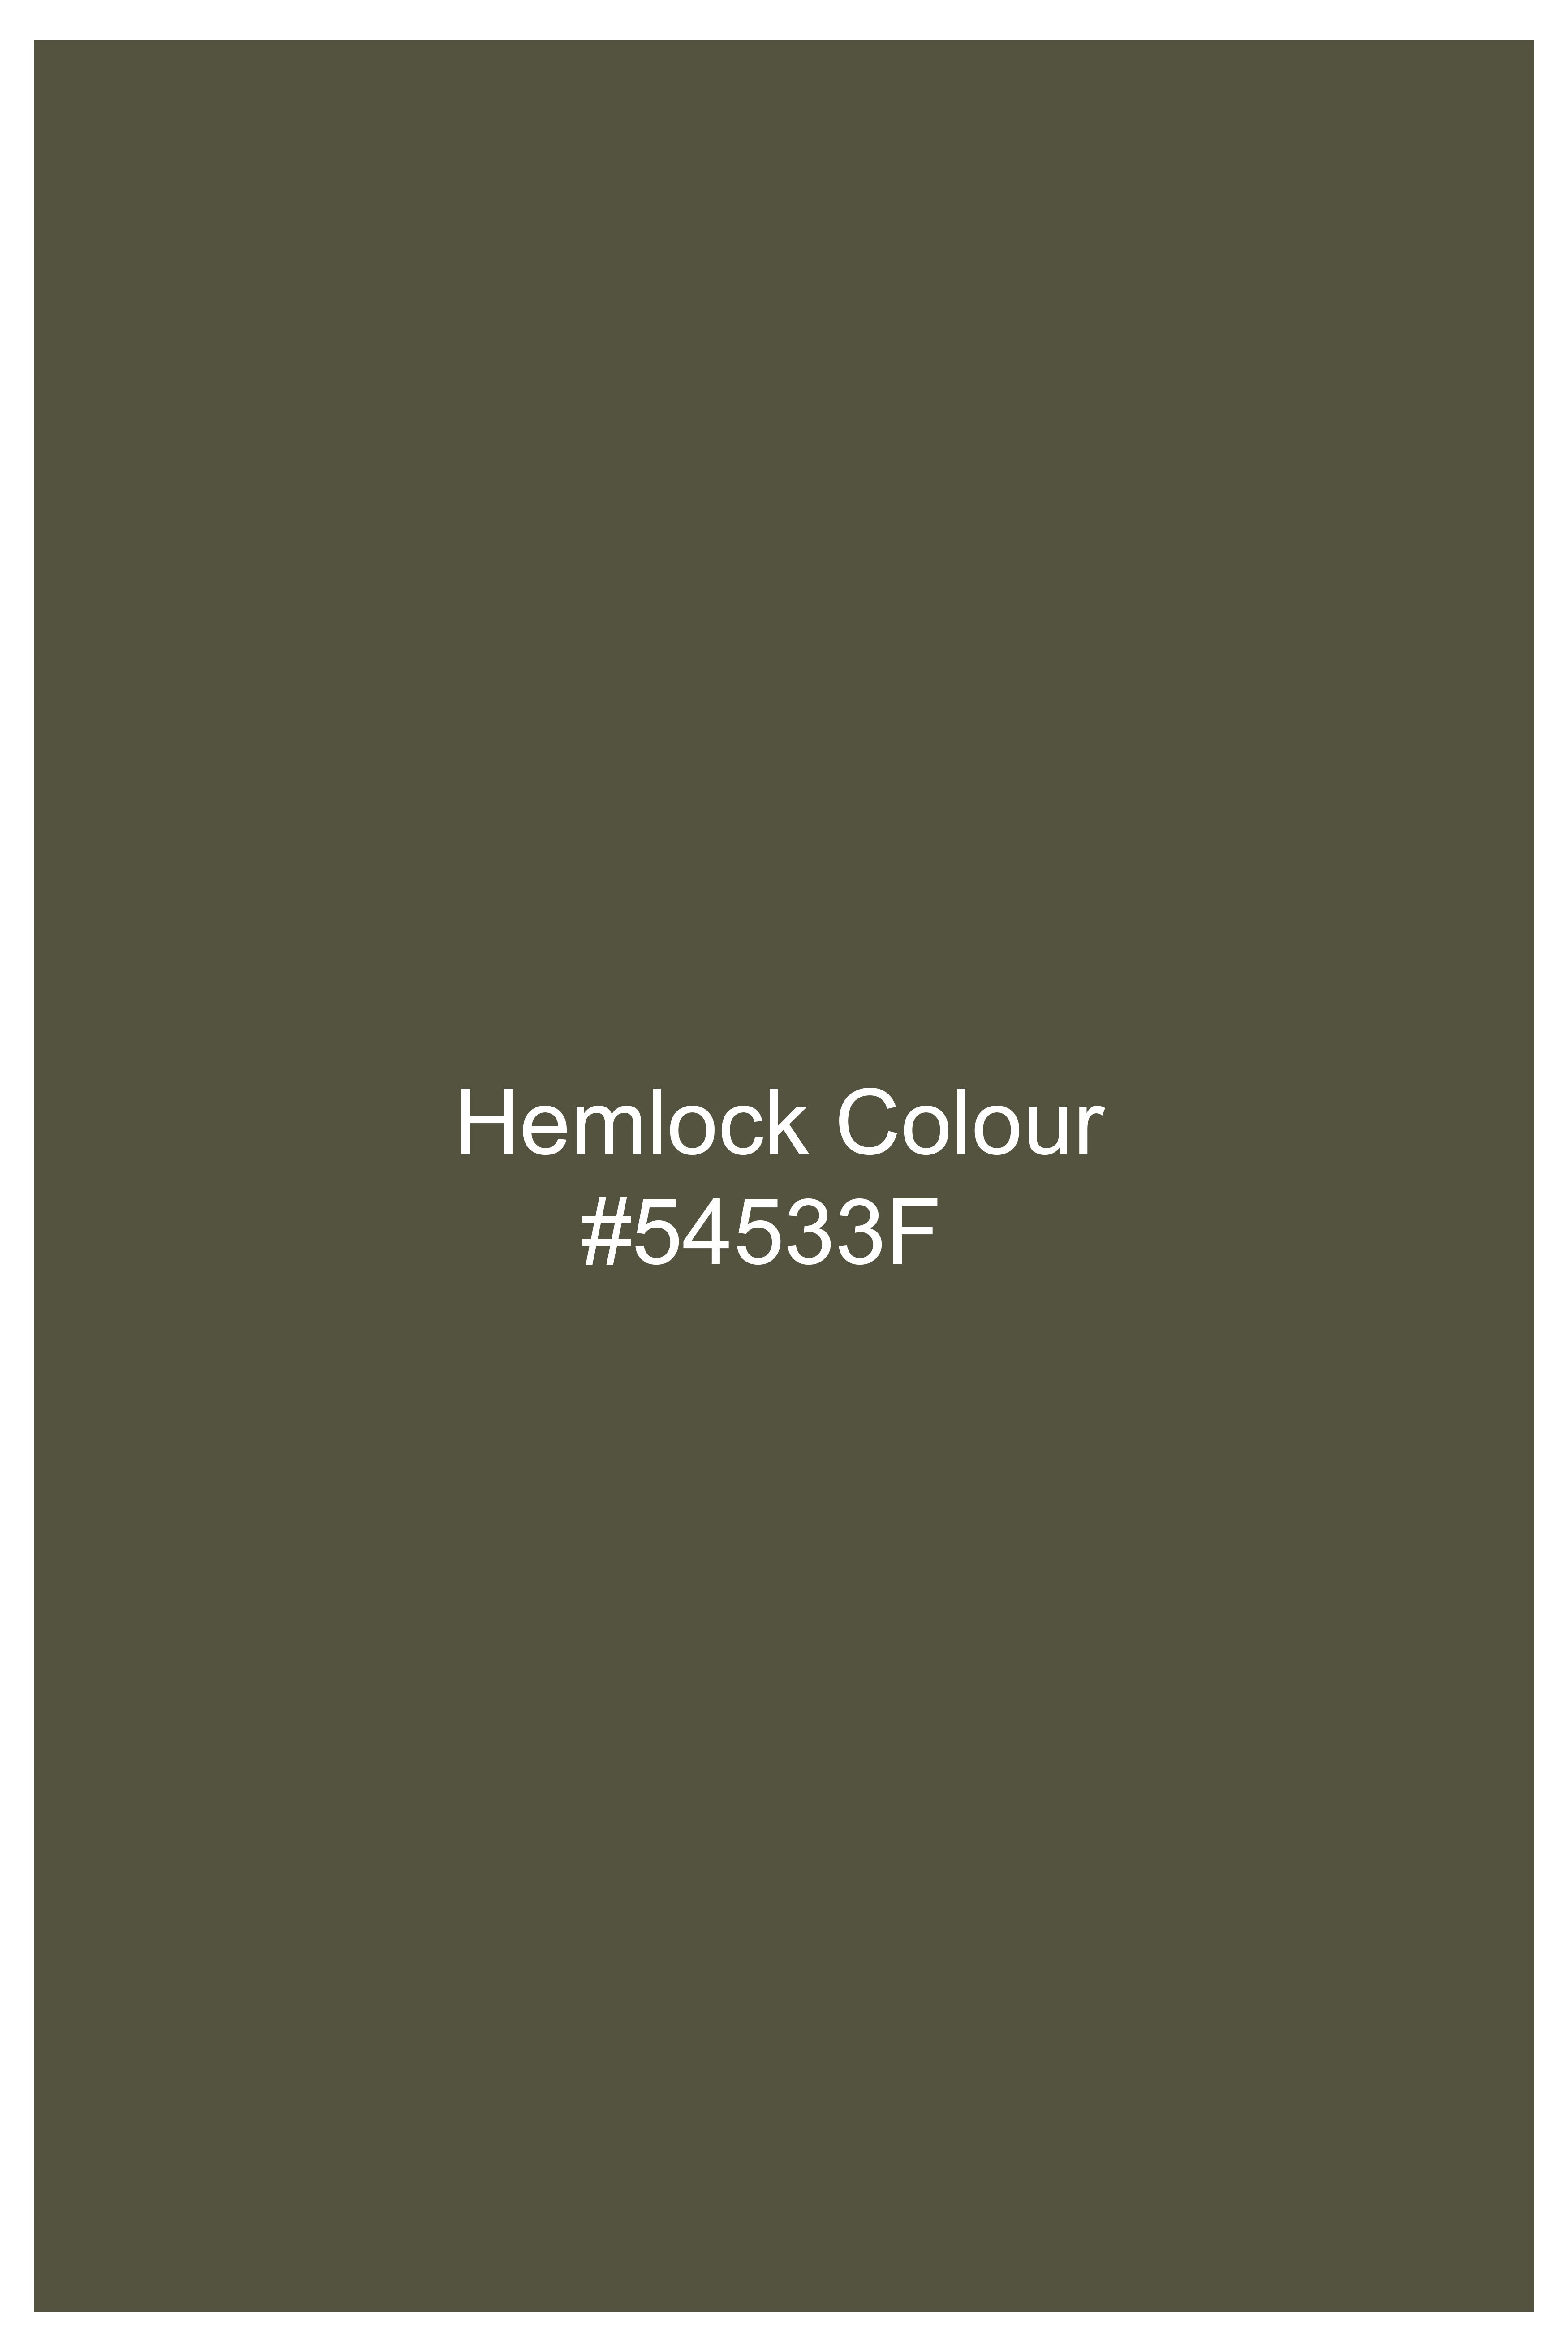 Hemlock Green Premium Cotton Stretchable traveler Suit ST2784-SB36, ST2784-SB38, ST2784-SB40, ST2784-SB42, ST2784-SB44, ST2784-SB46, ST2784-SB48, ST2784-SB50, ST2784-SB52, ST2784-SB54, ST2784-SB56, ST2784-SB58, ST2784-SB60